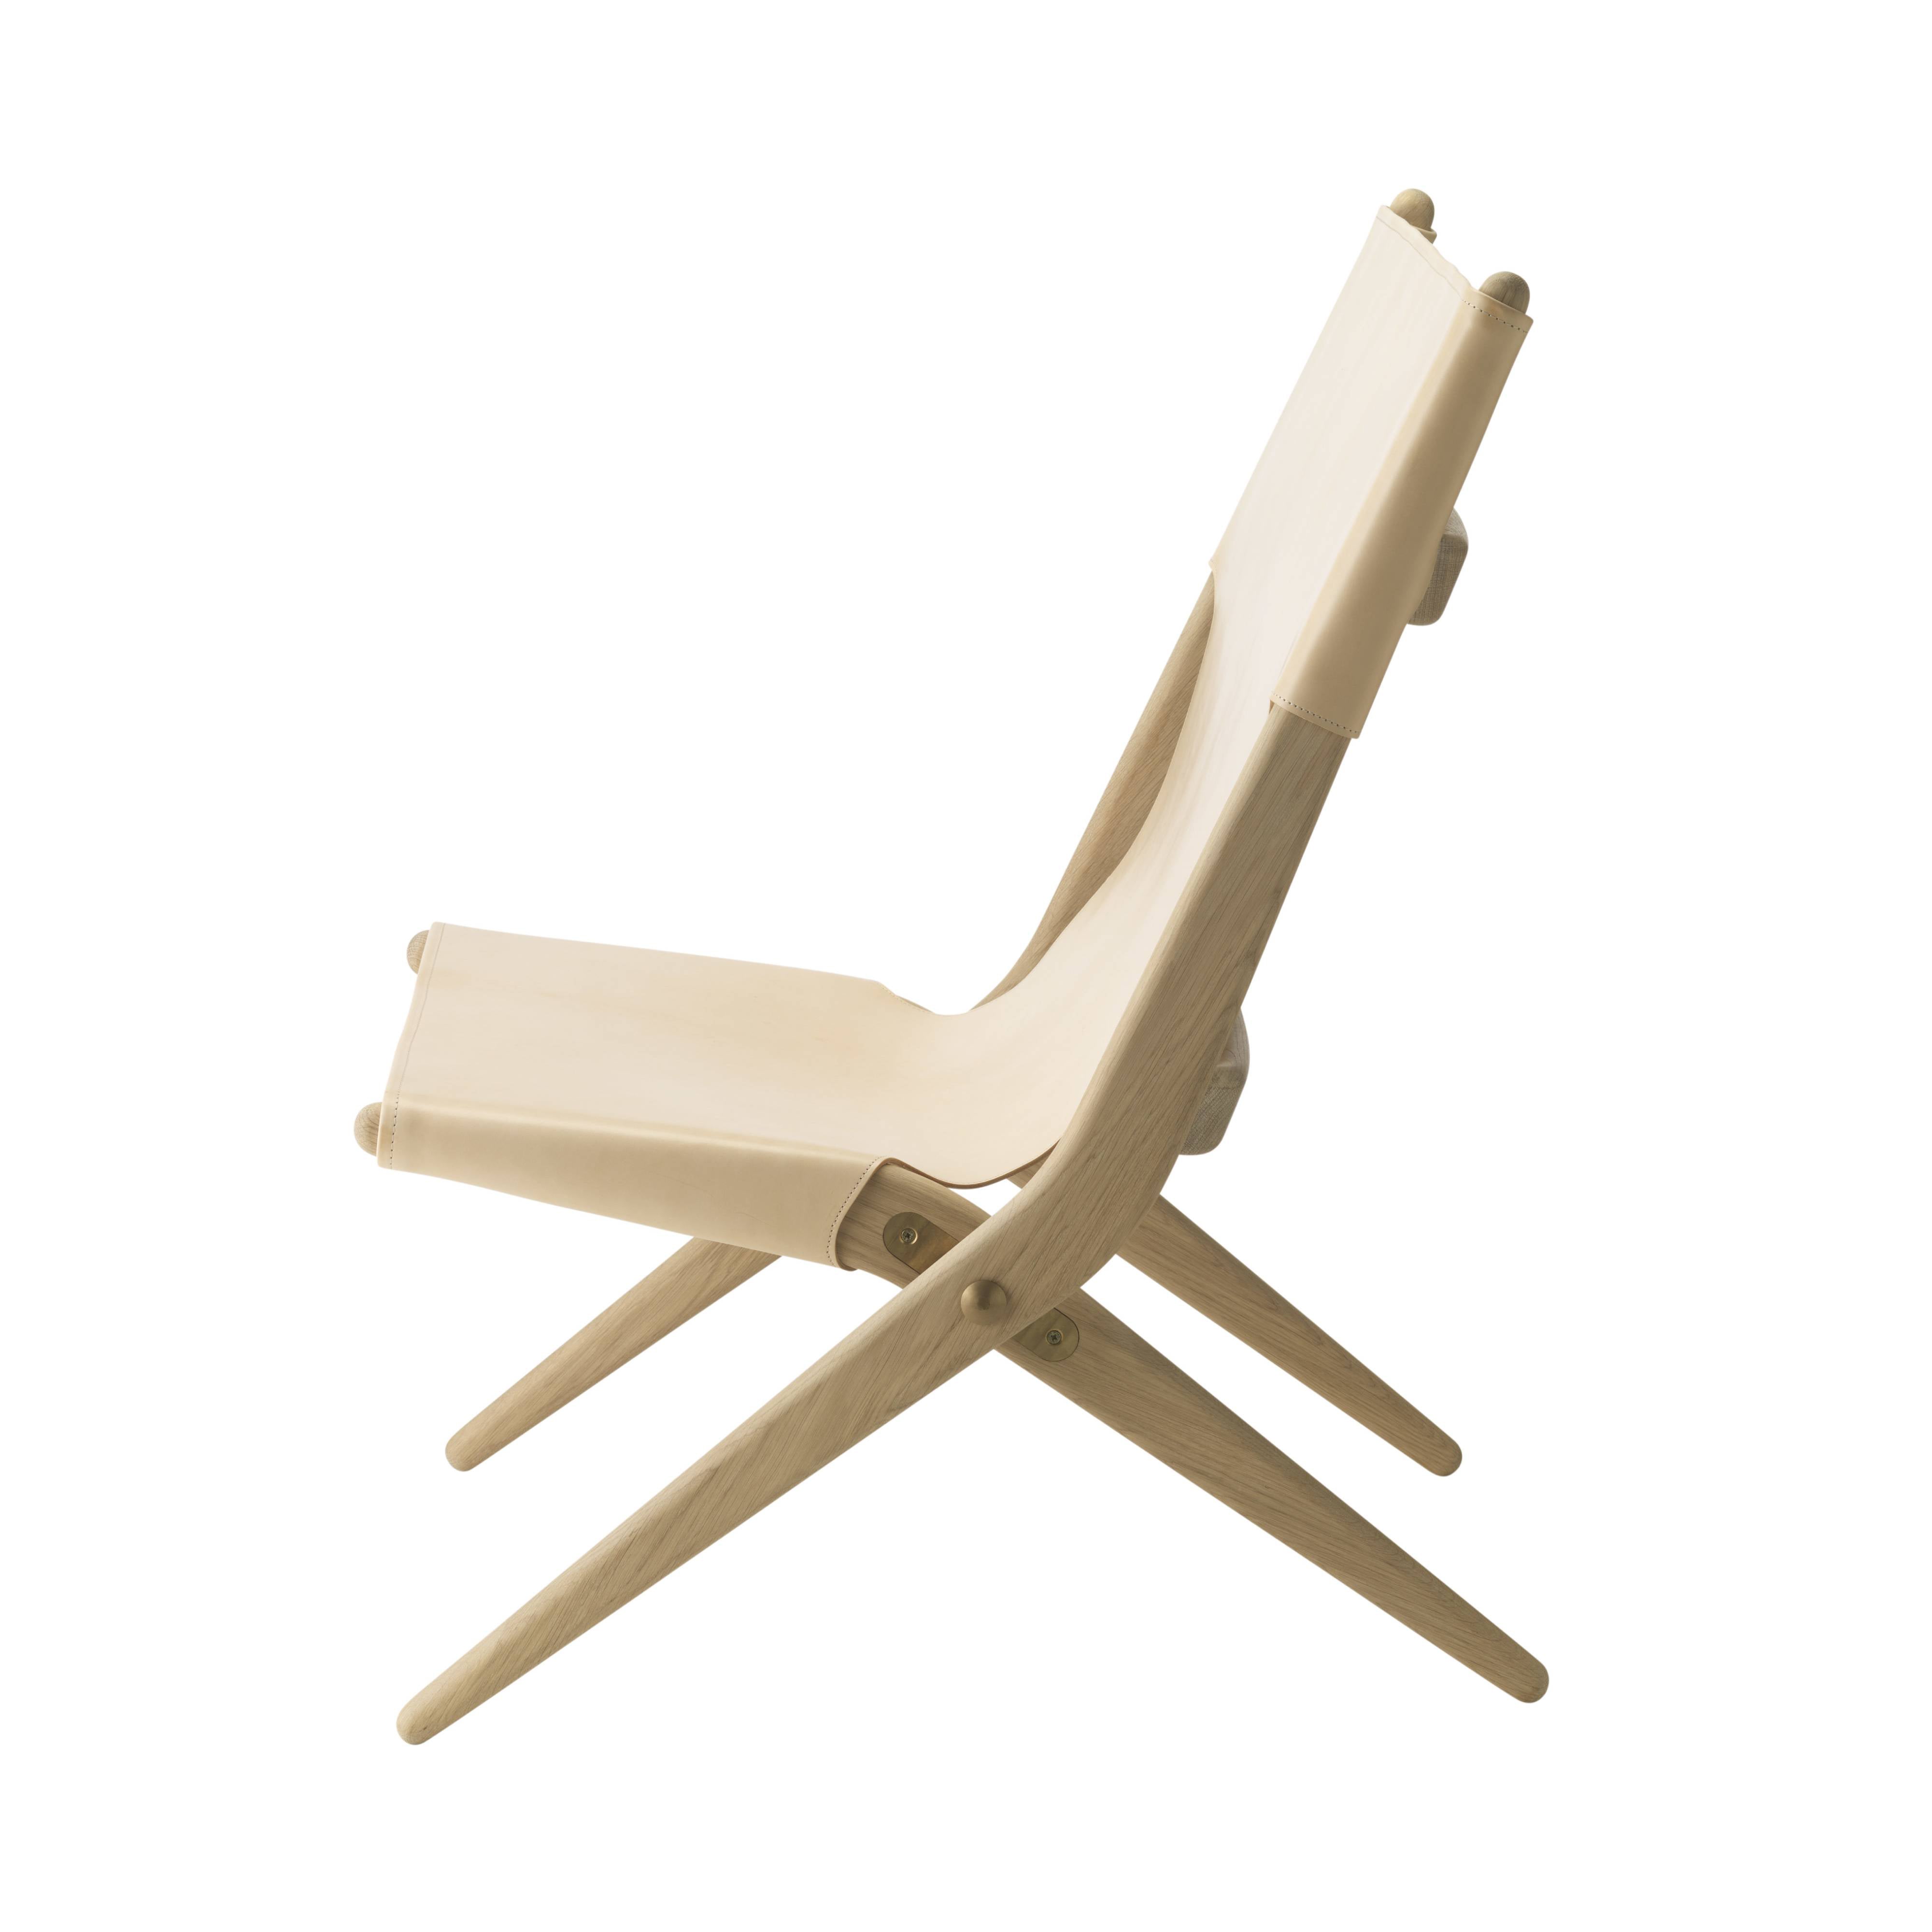 Saxe Folding Chair: Soap Treated Oak